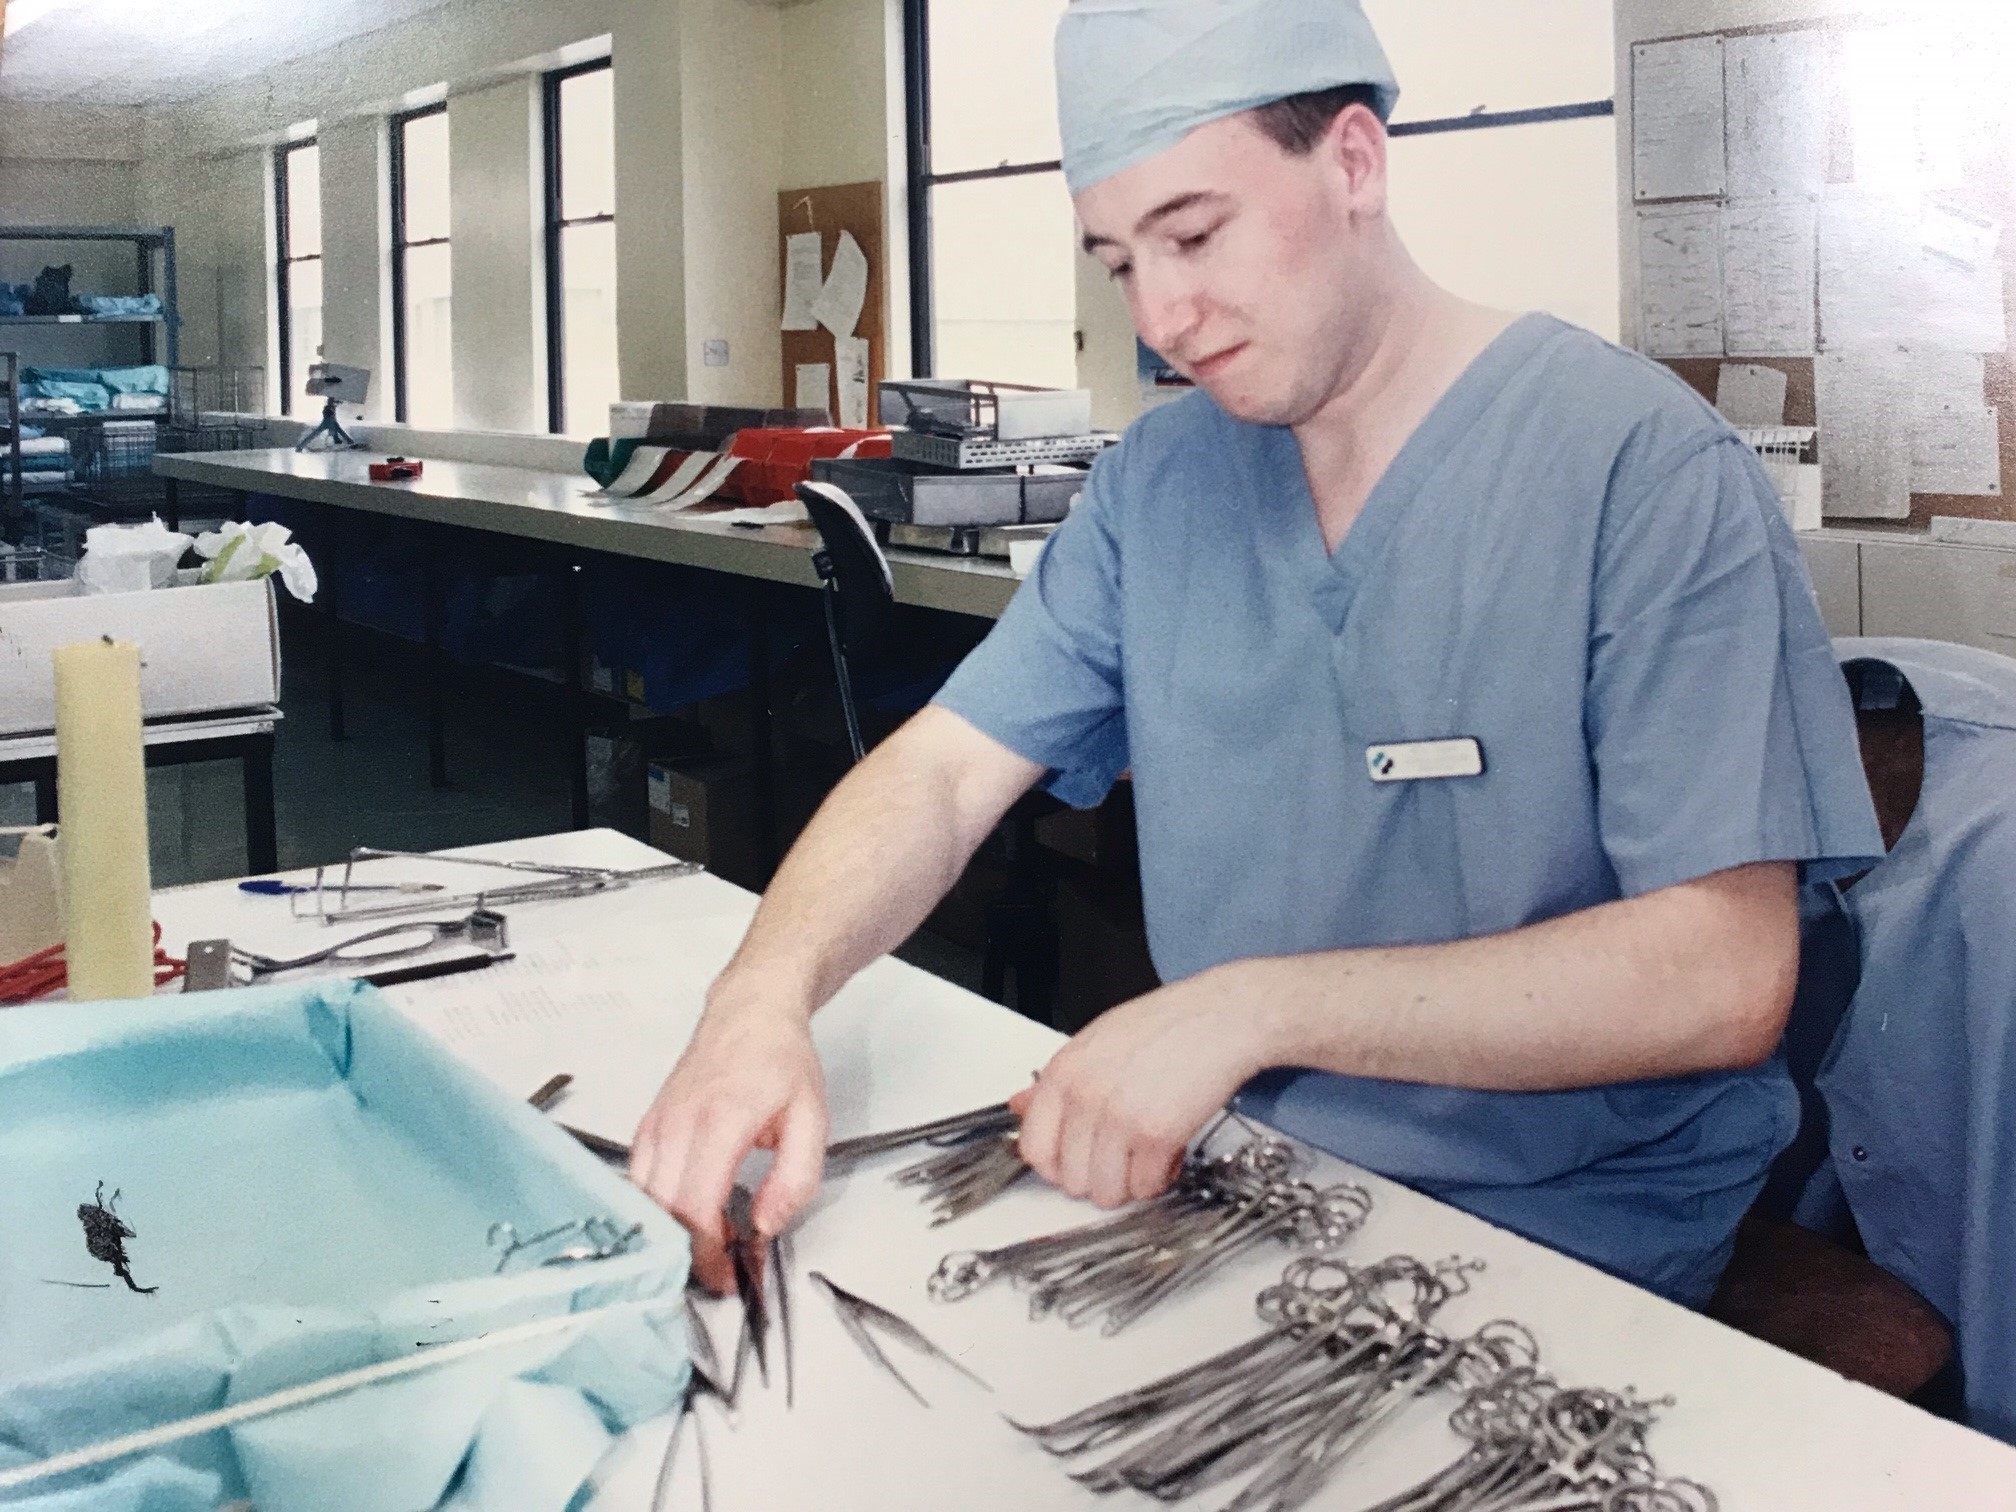 Equipement - Pete Tebbs sterilises surgical equipment in June 1994